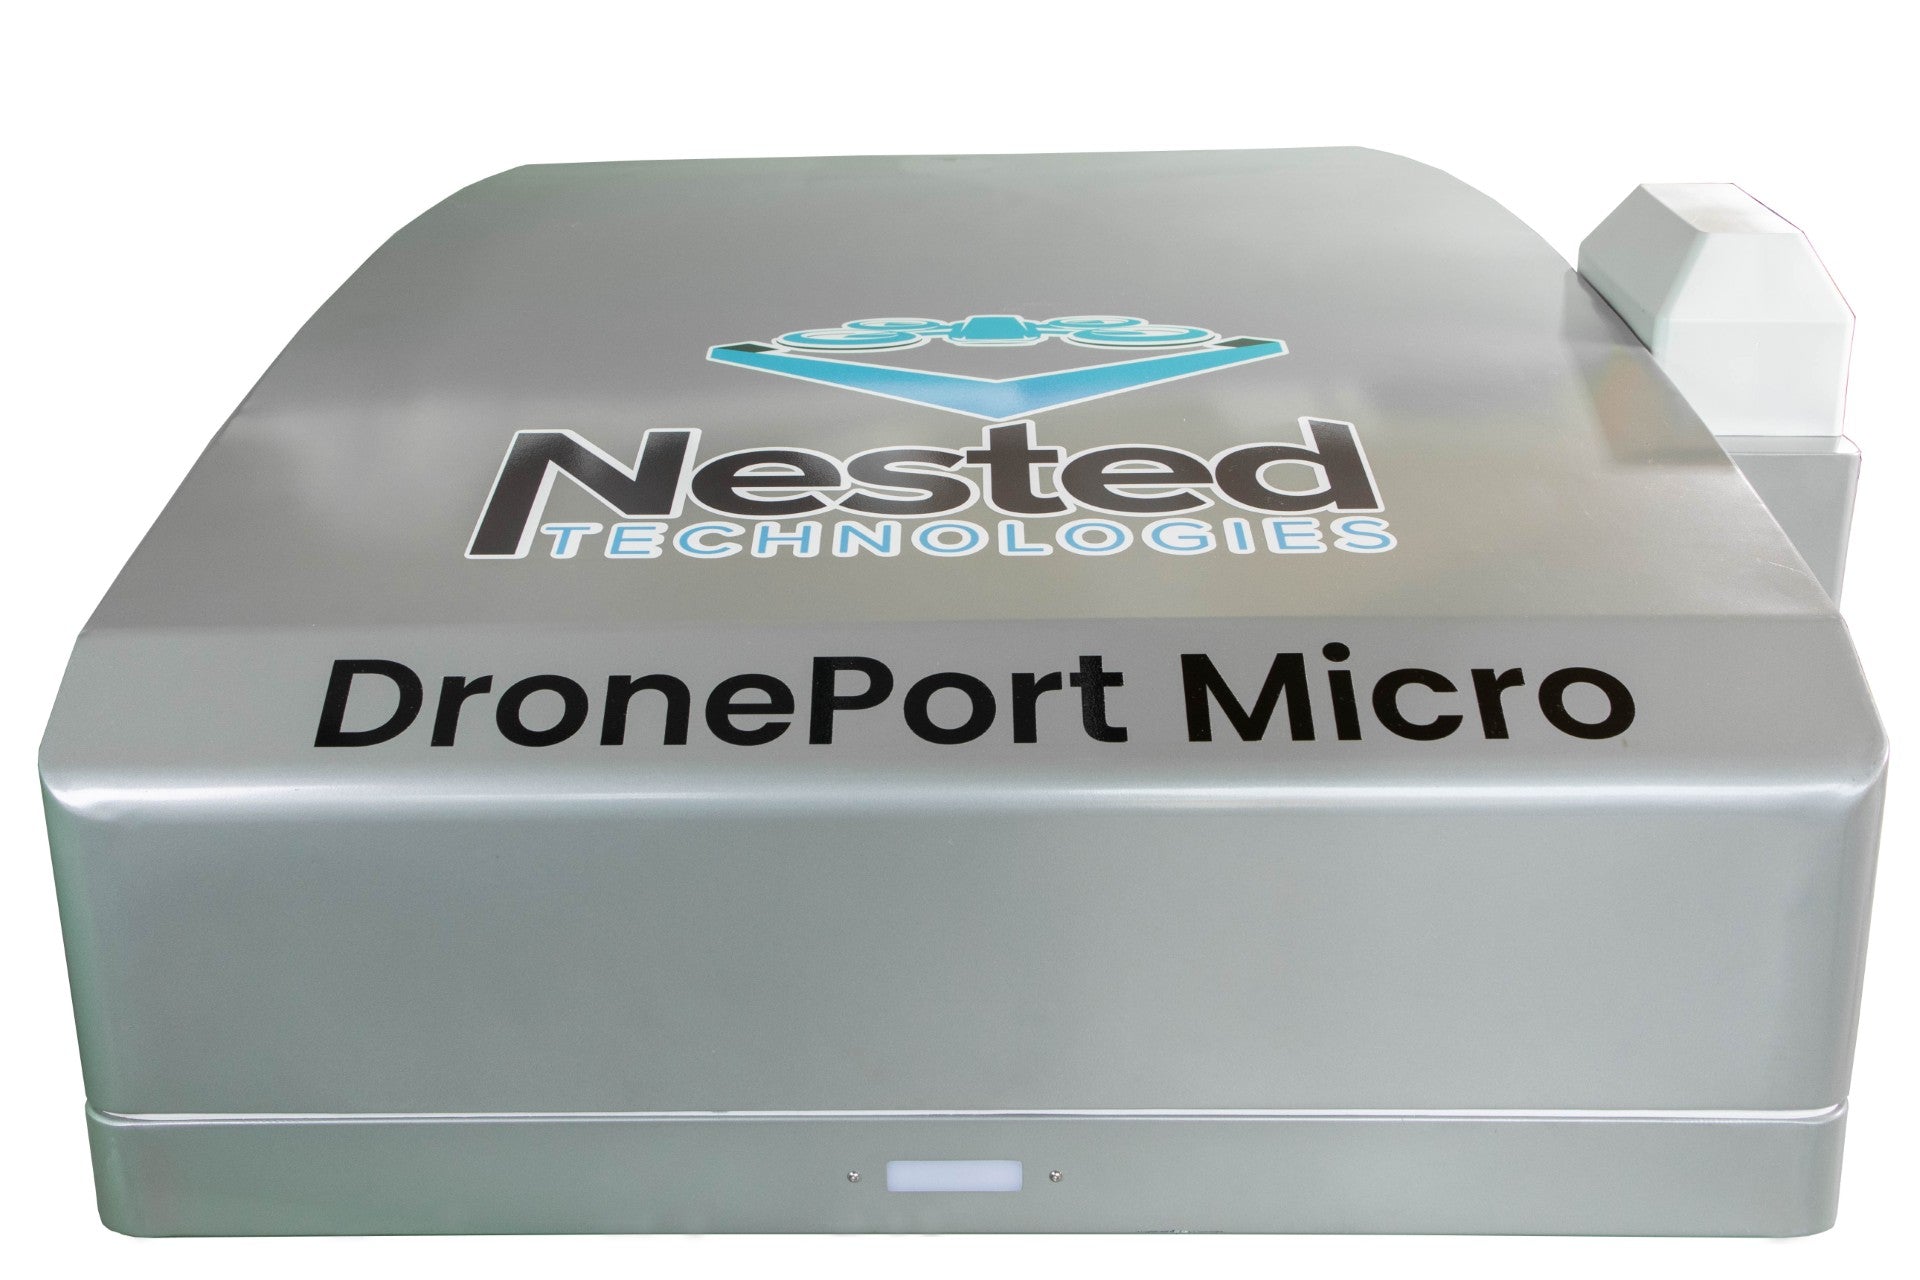 DronePort Micro